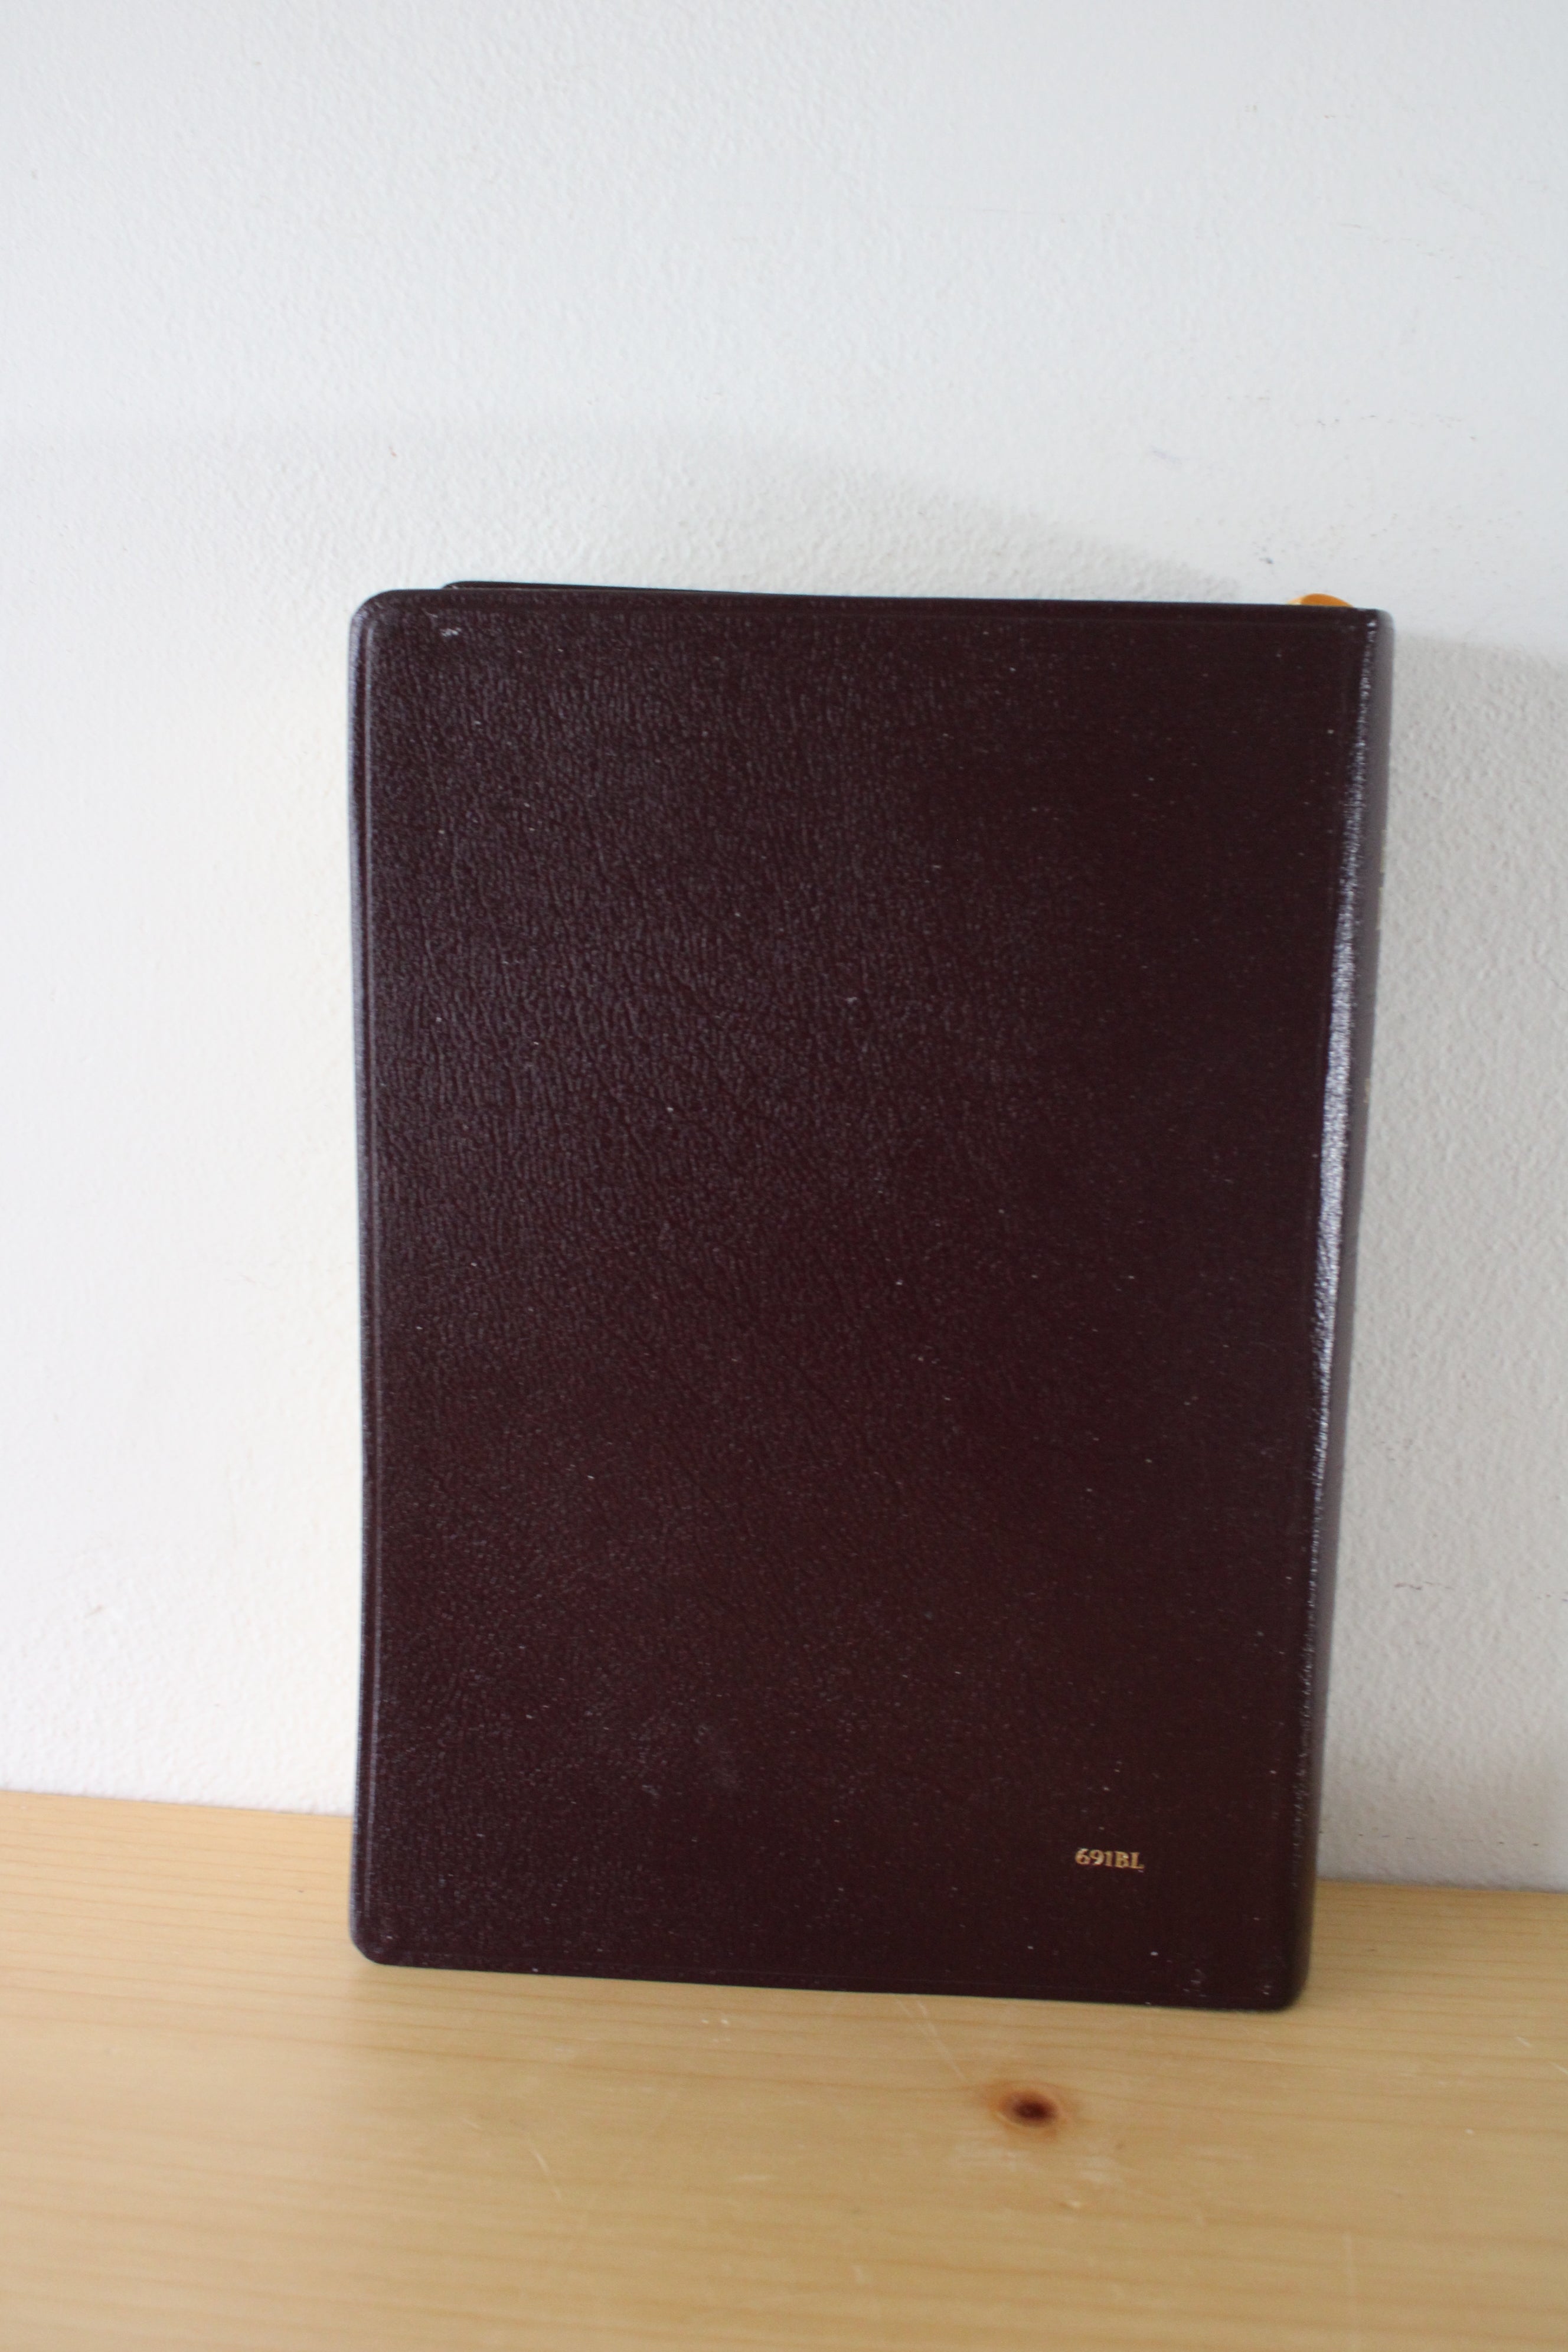 The Scofield Study Bible III Bonded Leather Large Print NIV Bible